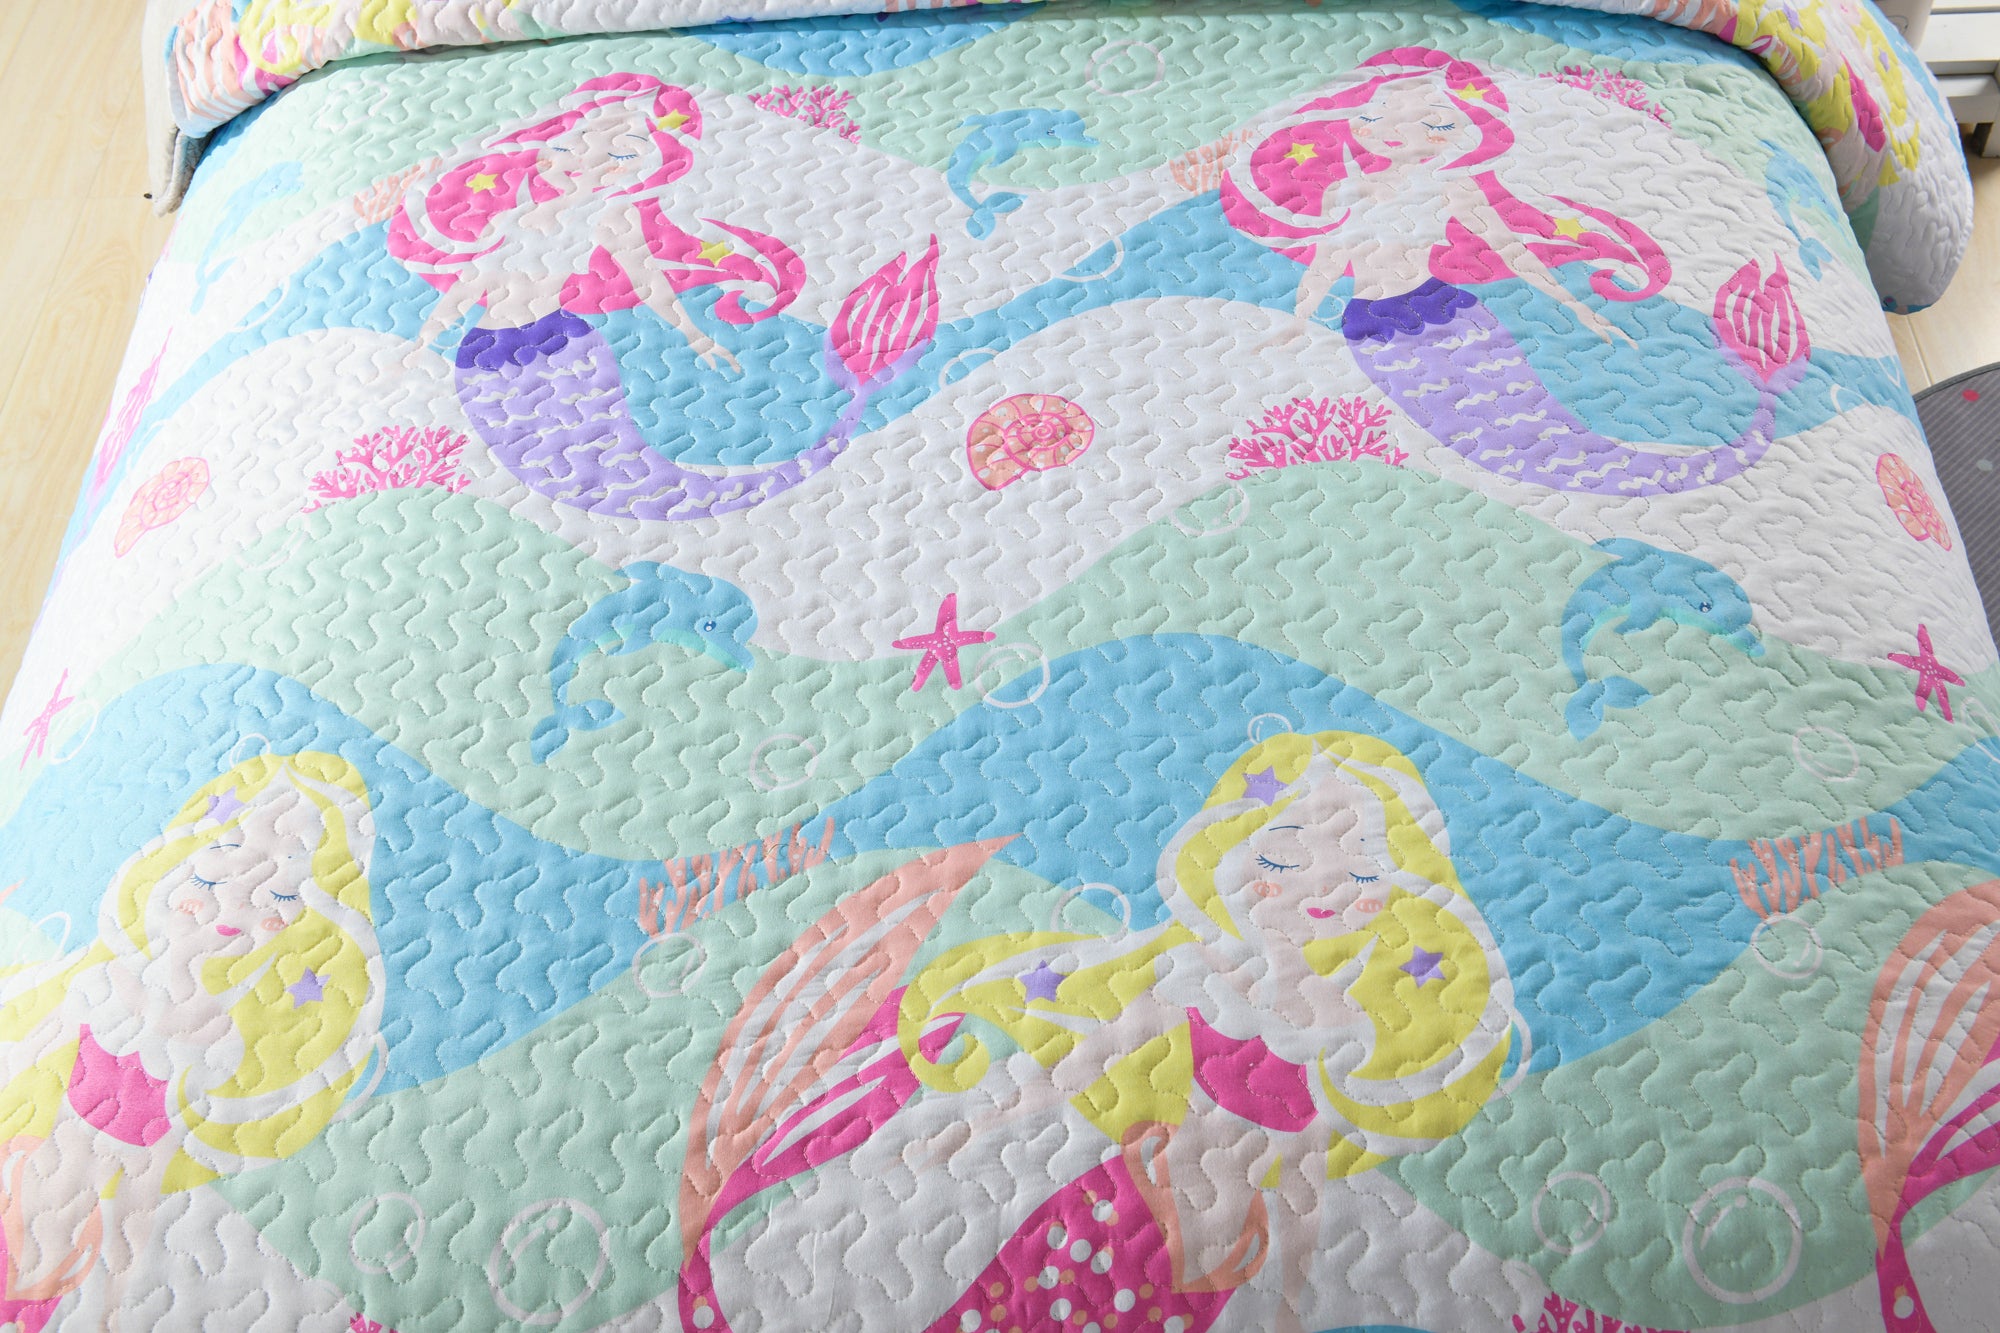 2/3Pcs Mermaid Kids Quilt Set Bedspread Coverlet Set A94